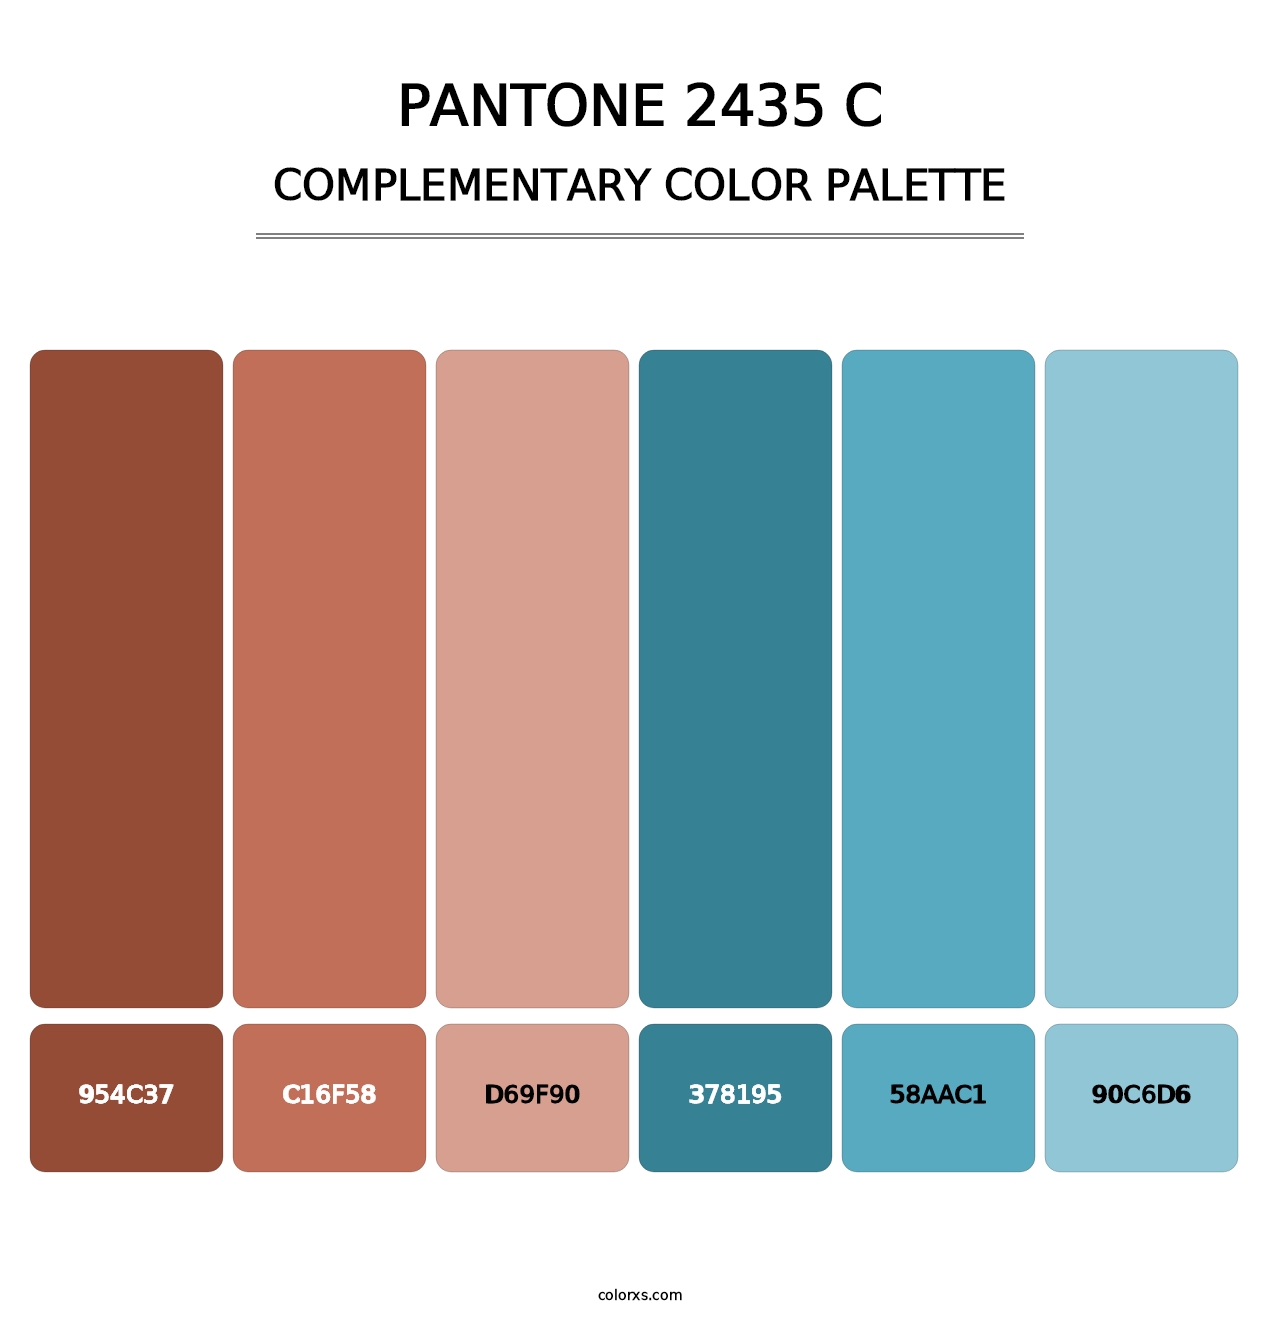 PANTONE 2435 C - Complementary Color Palette